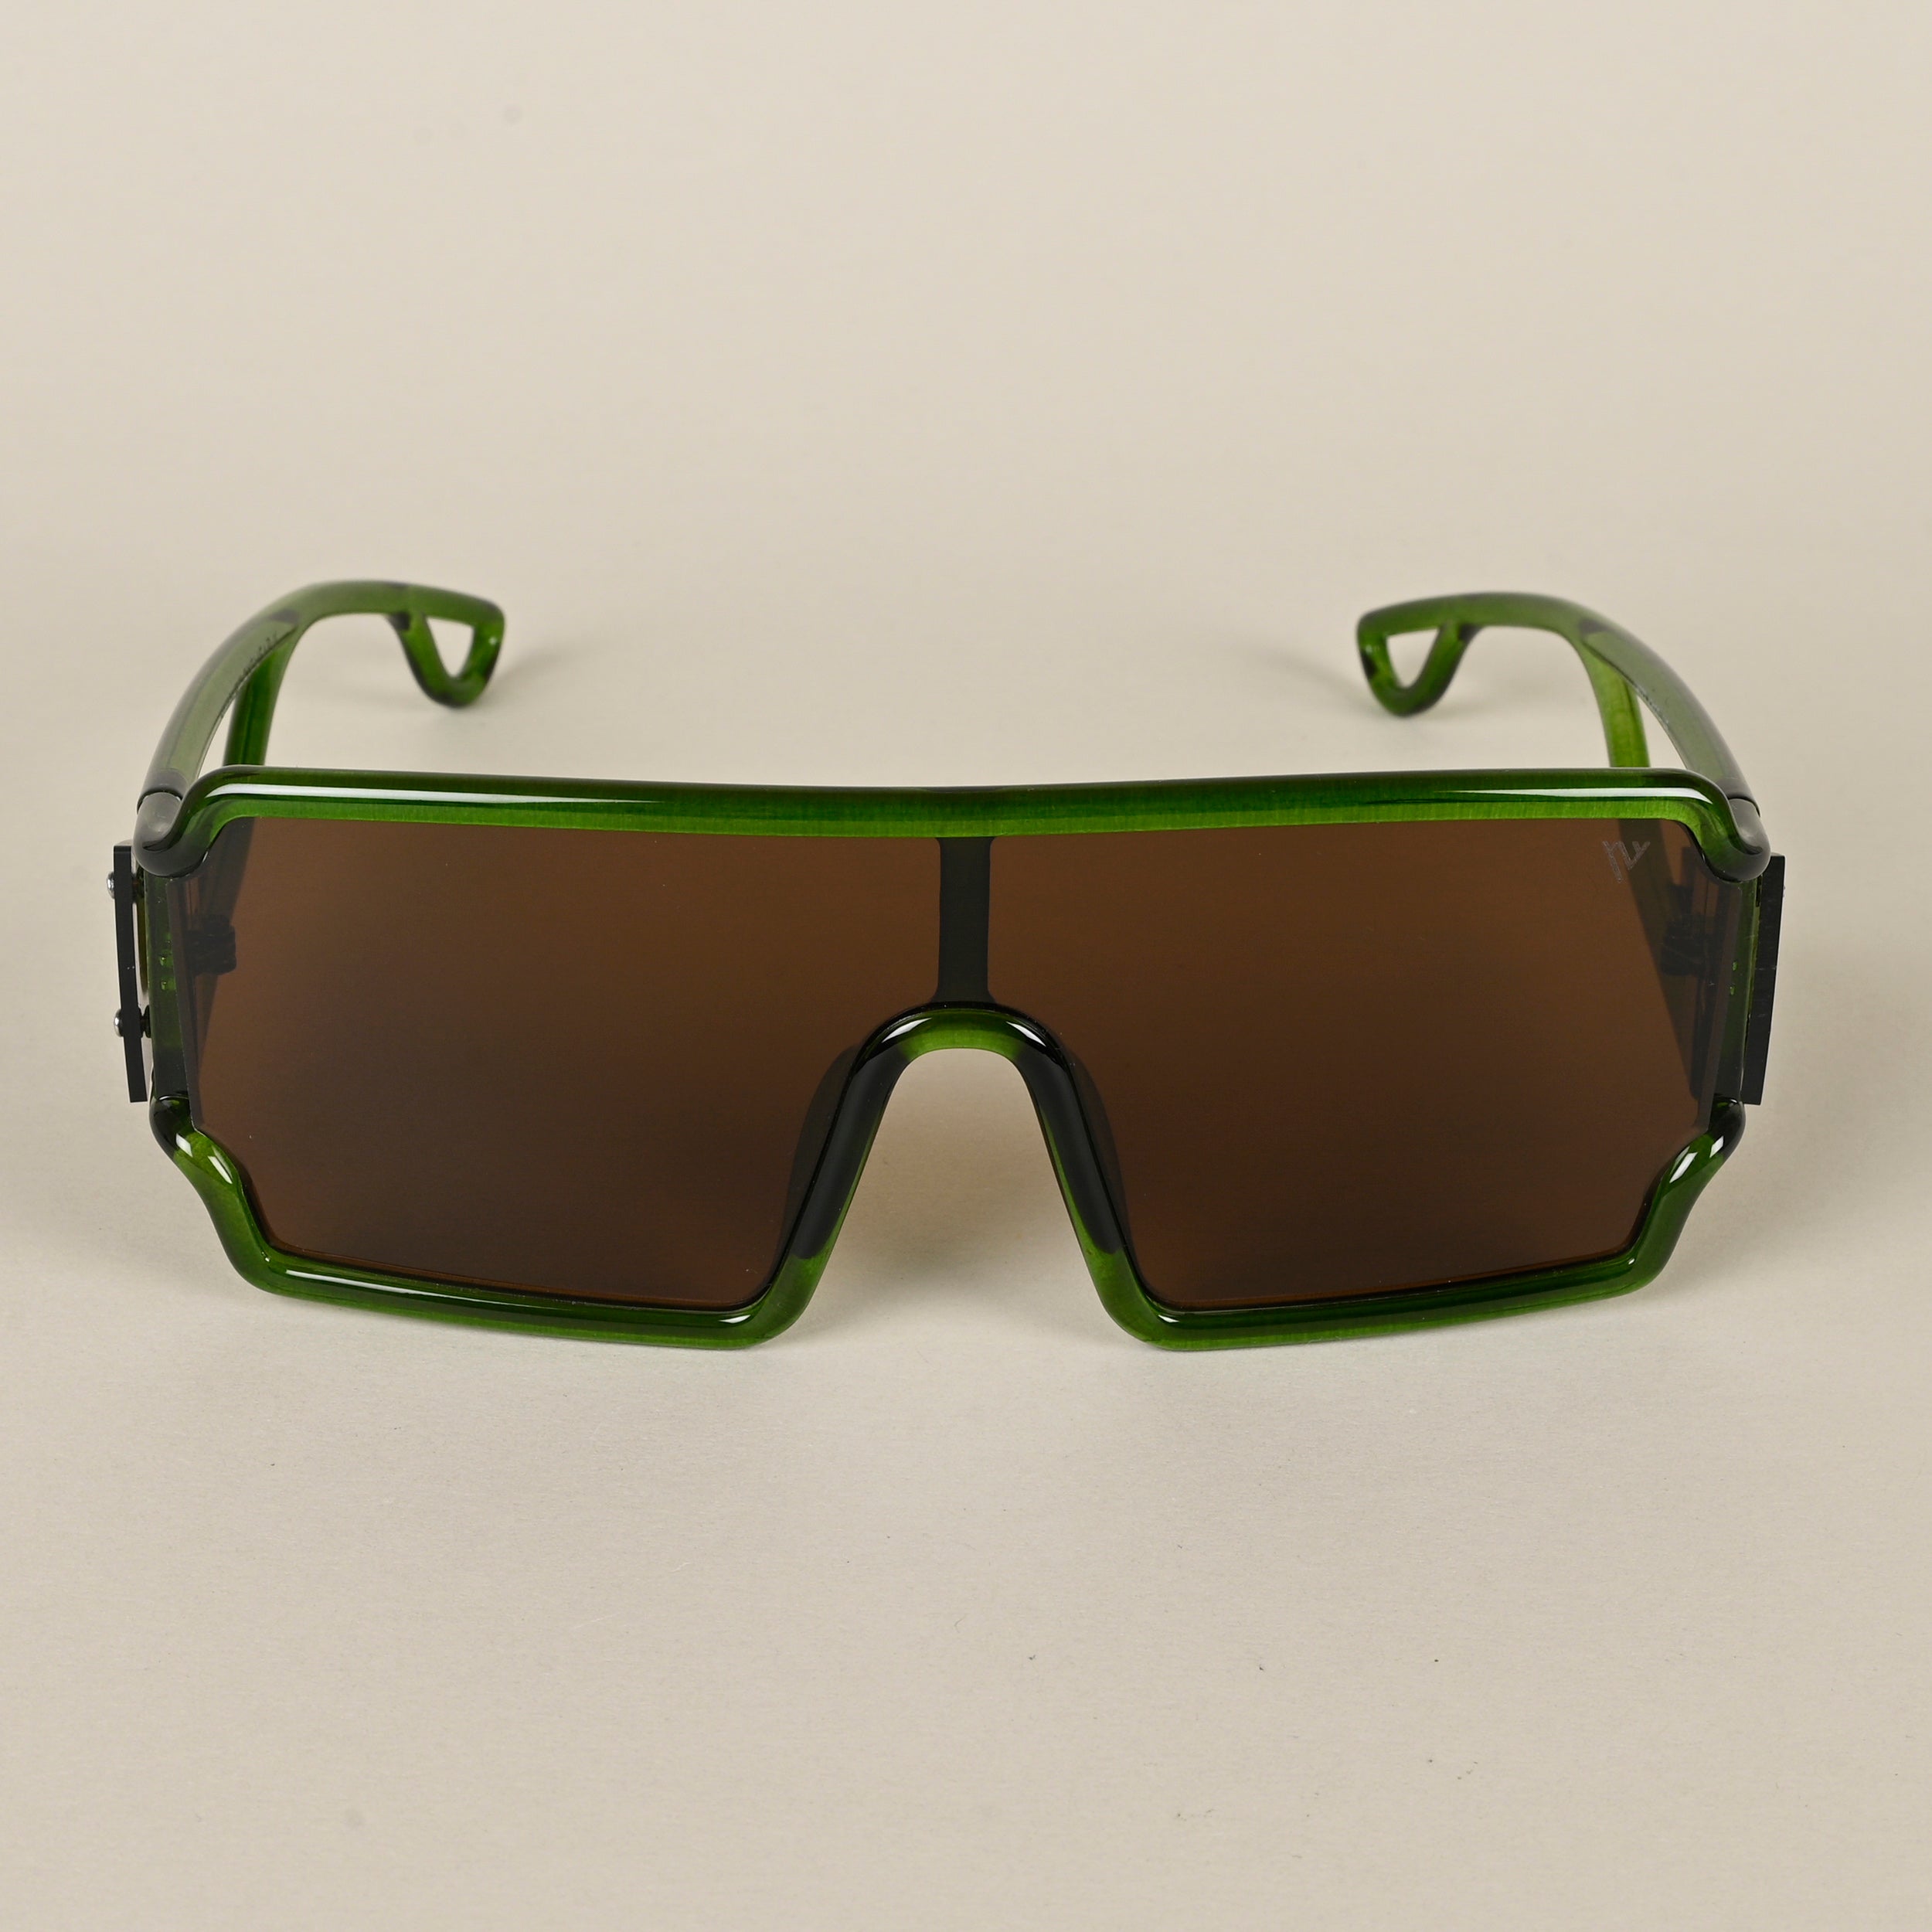 Voyage Green Wayfarer Sunglasses for Men & Women - MG4561